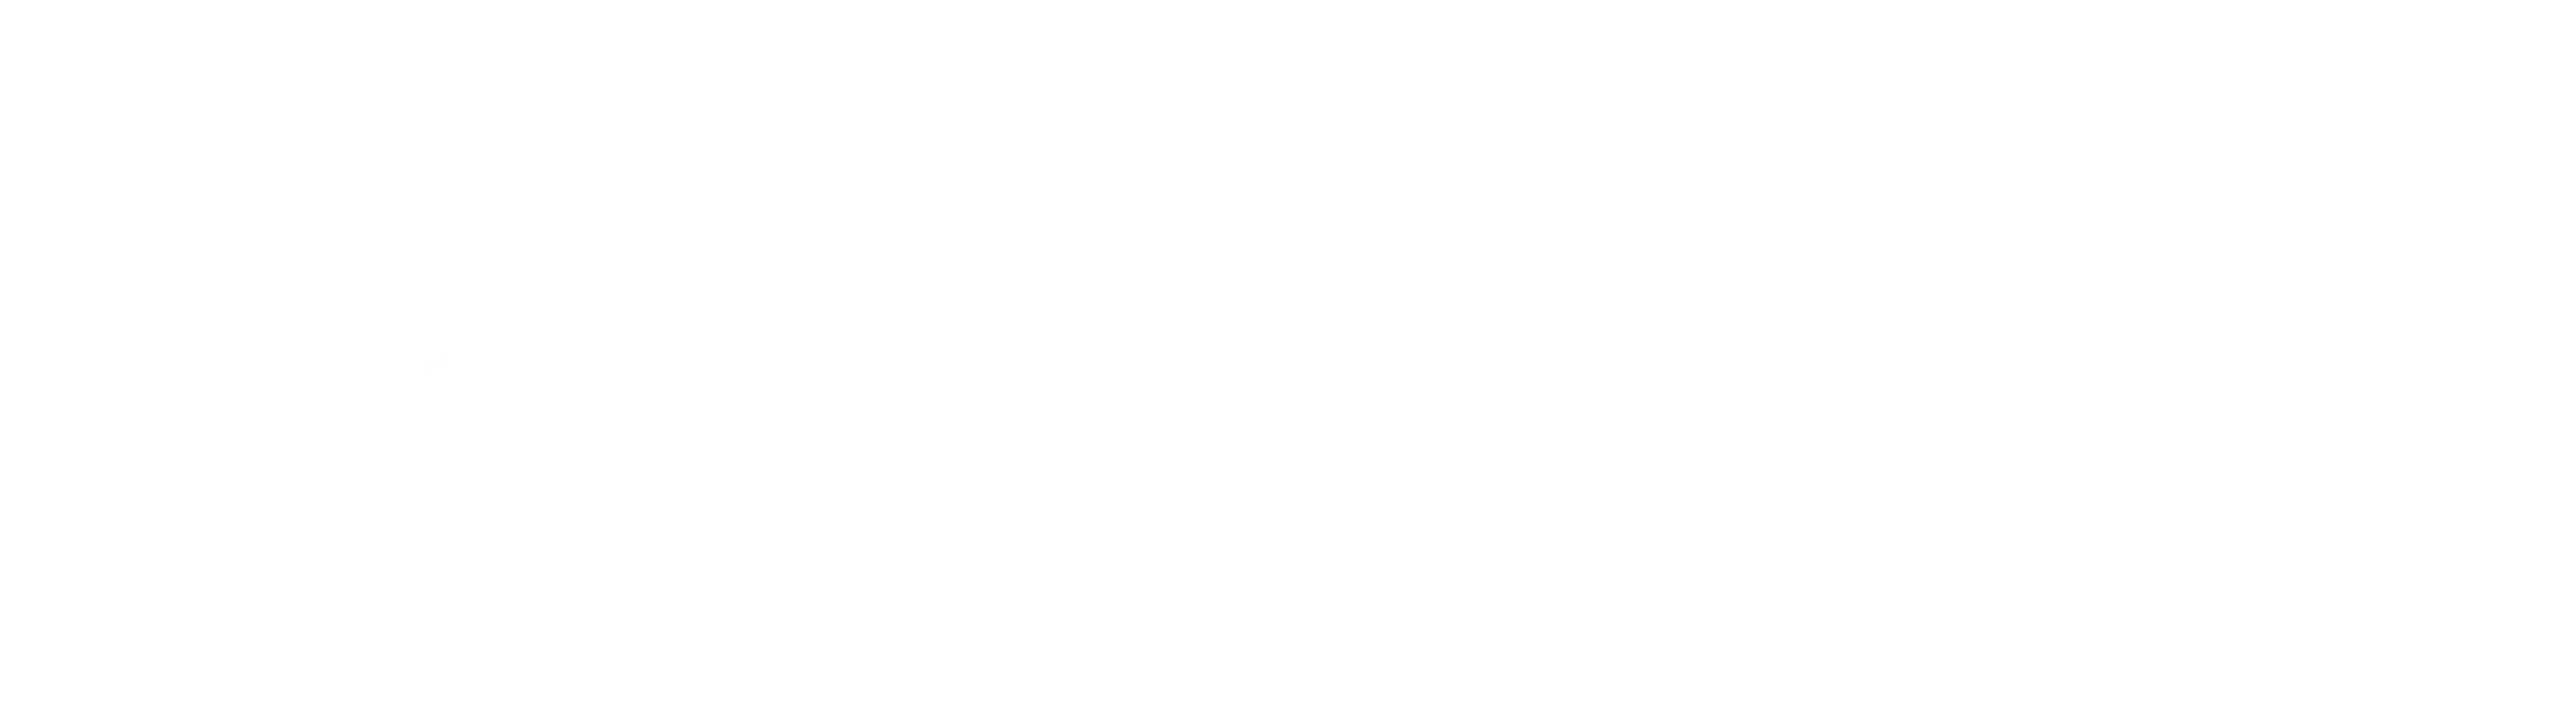 Youtube Originals Logo